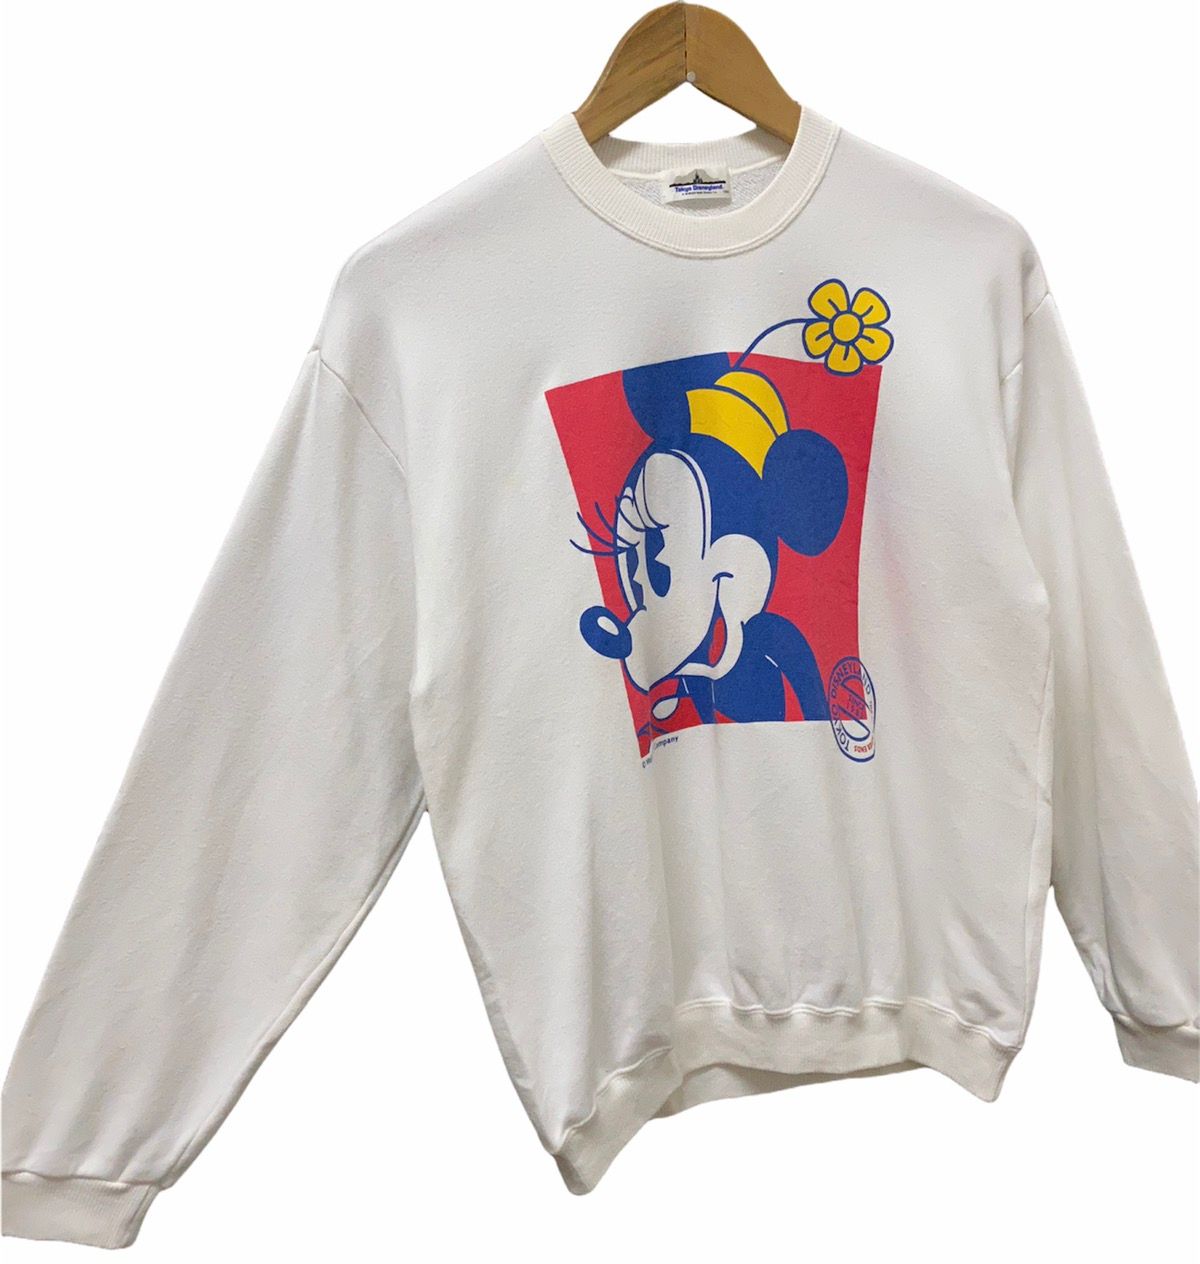 Archival Clothing - Grail🔥Vintage Mickey Mouse Disney Sweatshirt - 2